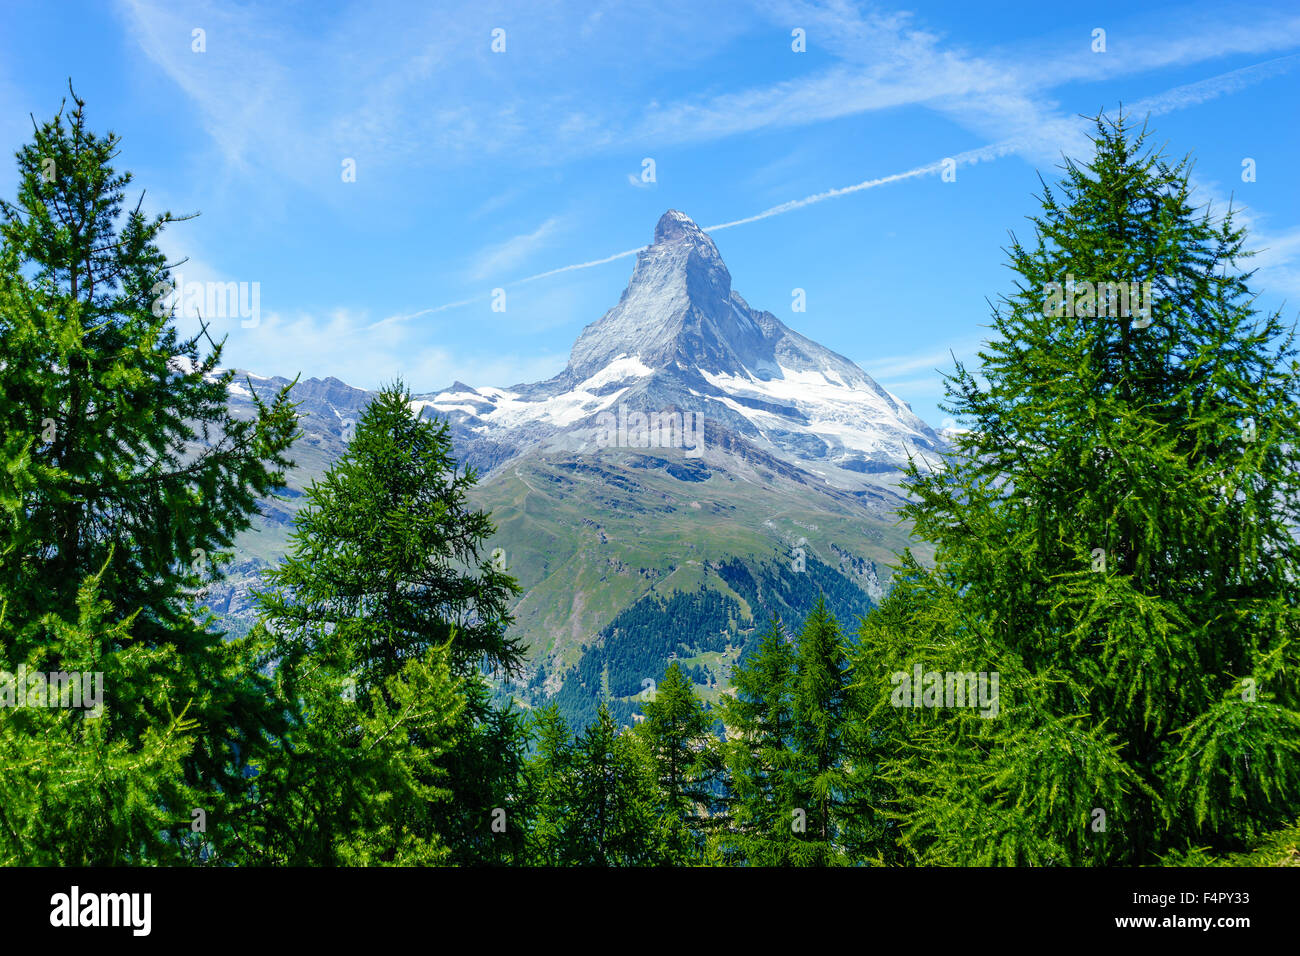 Blick durch die Kiefern zum Matterhorn Gipfel. Juli 2015. Matterhorn, Schweiz. Stockfoto